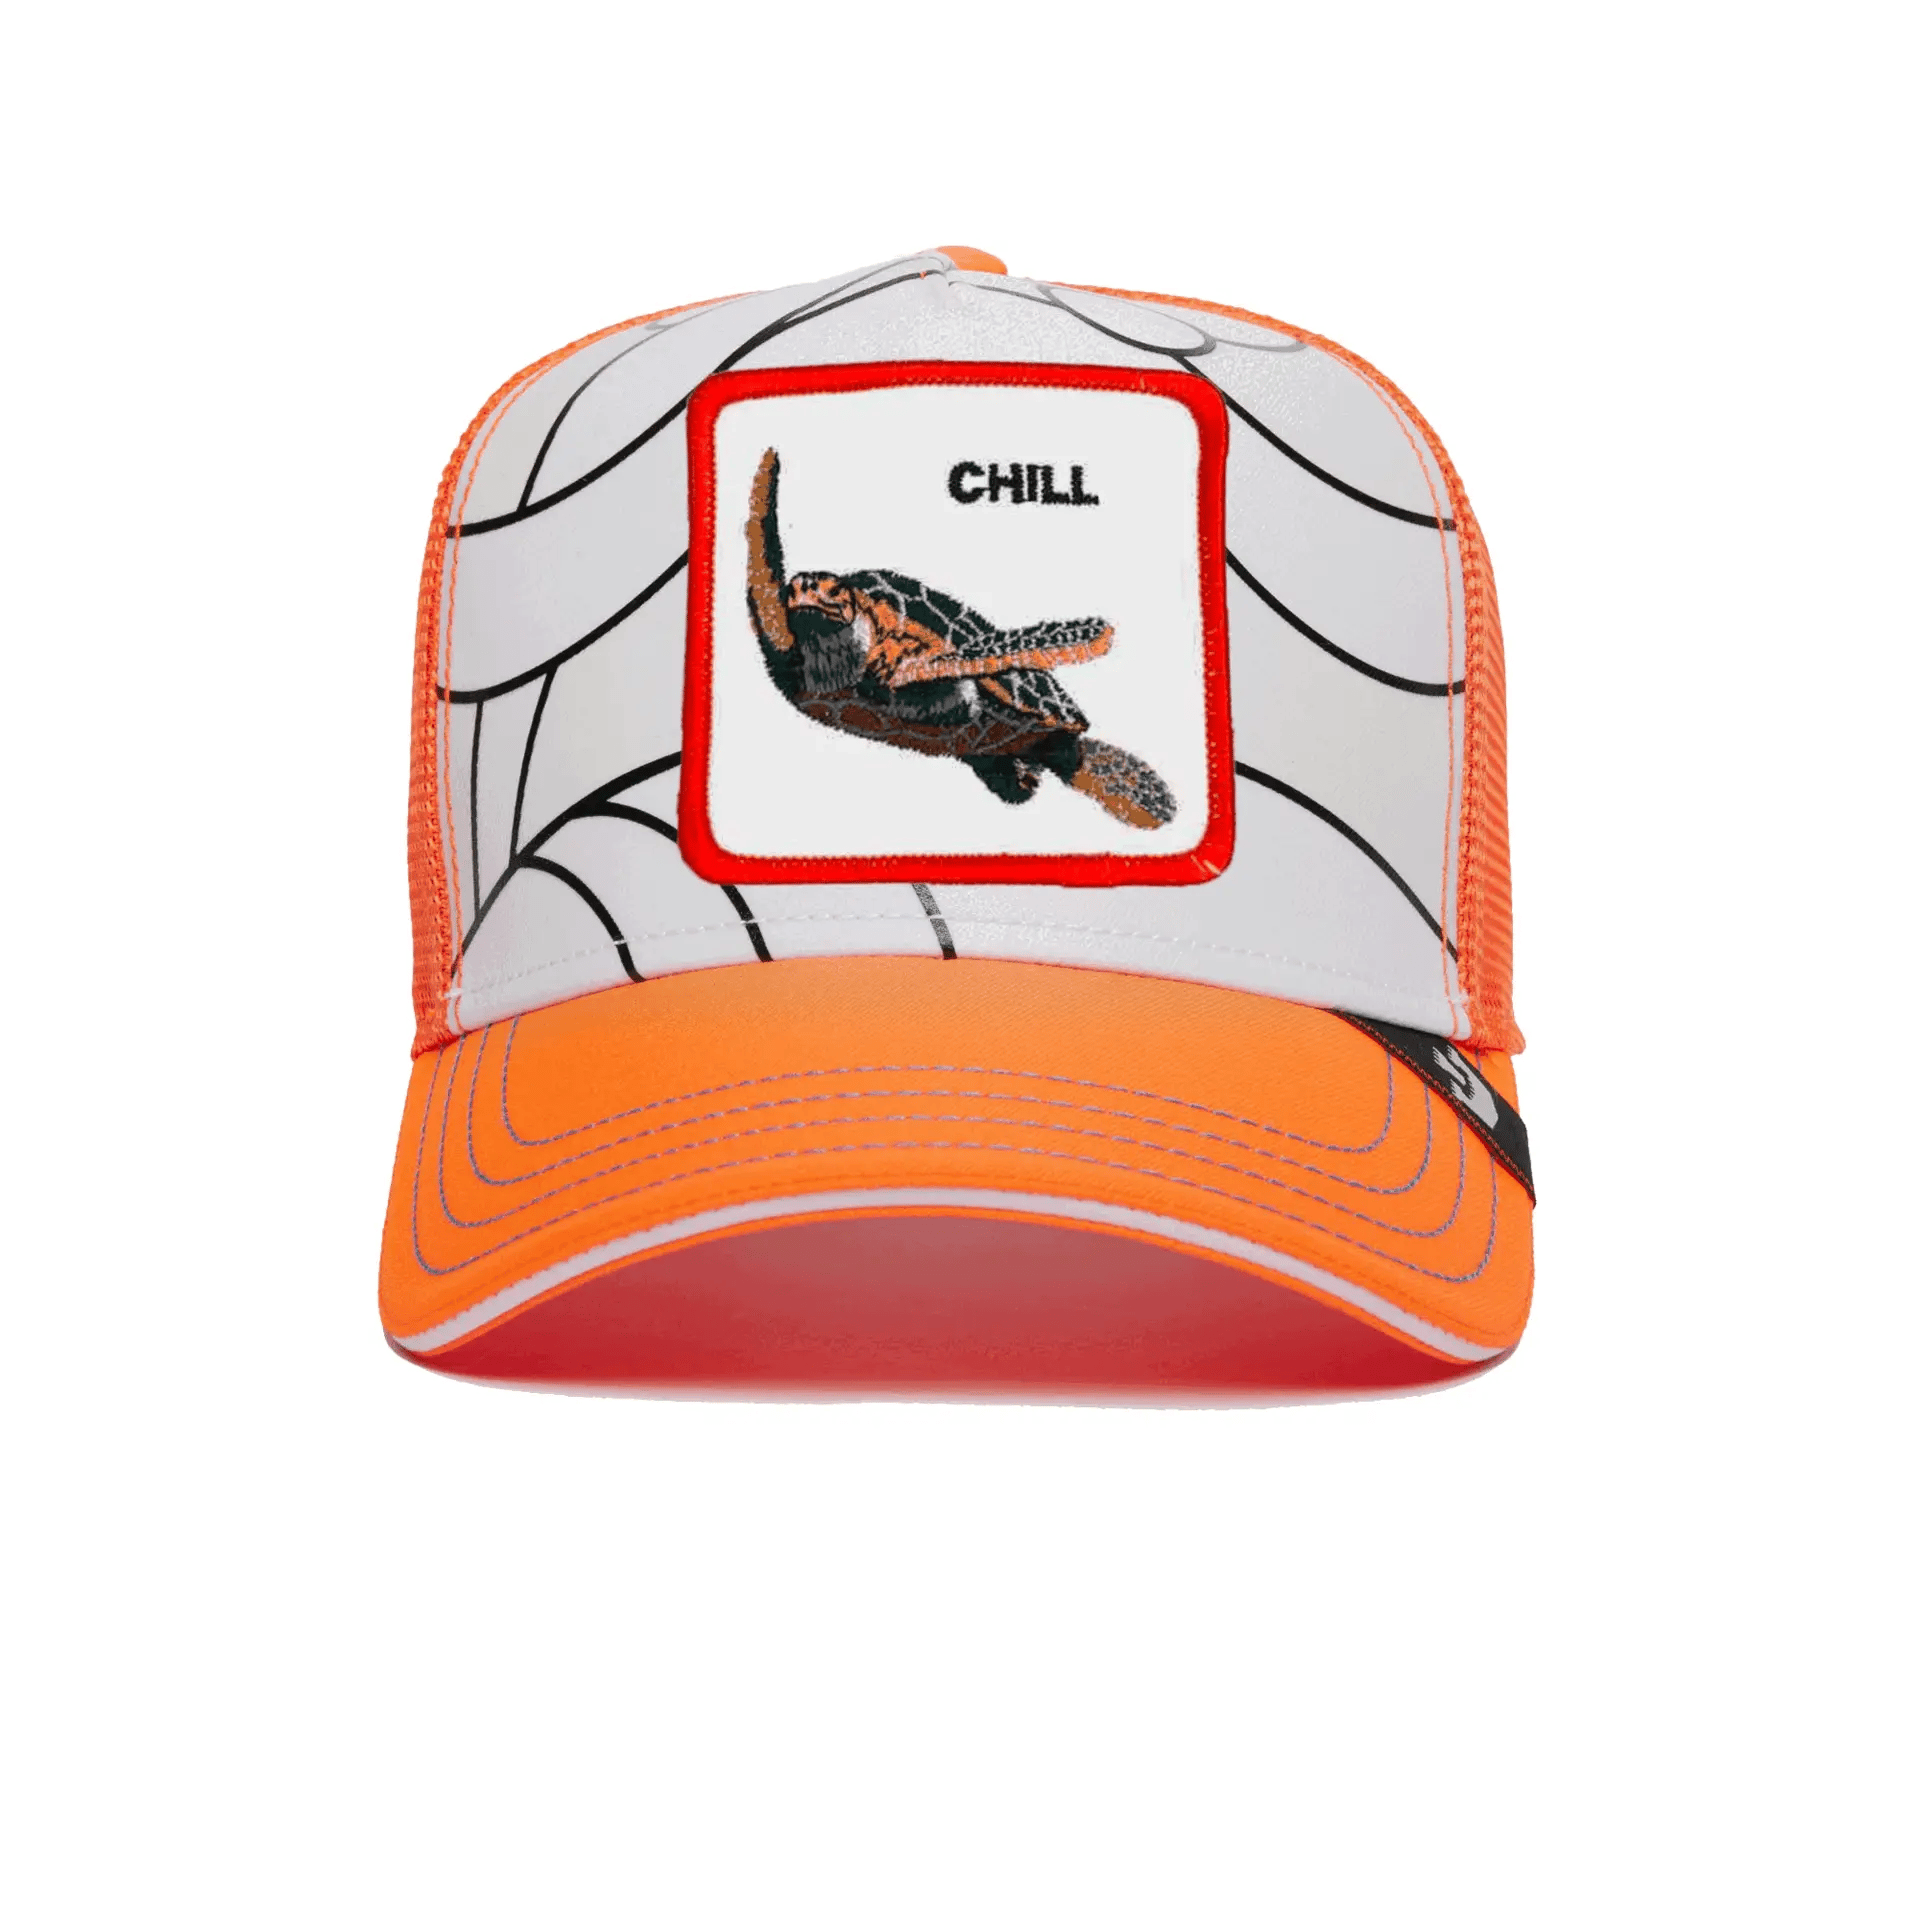 'Goorin Bros. 2 Crush 2 Furious Trucker Hat' in 'Orange' colour